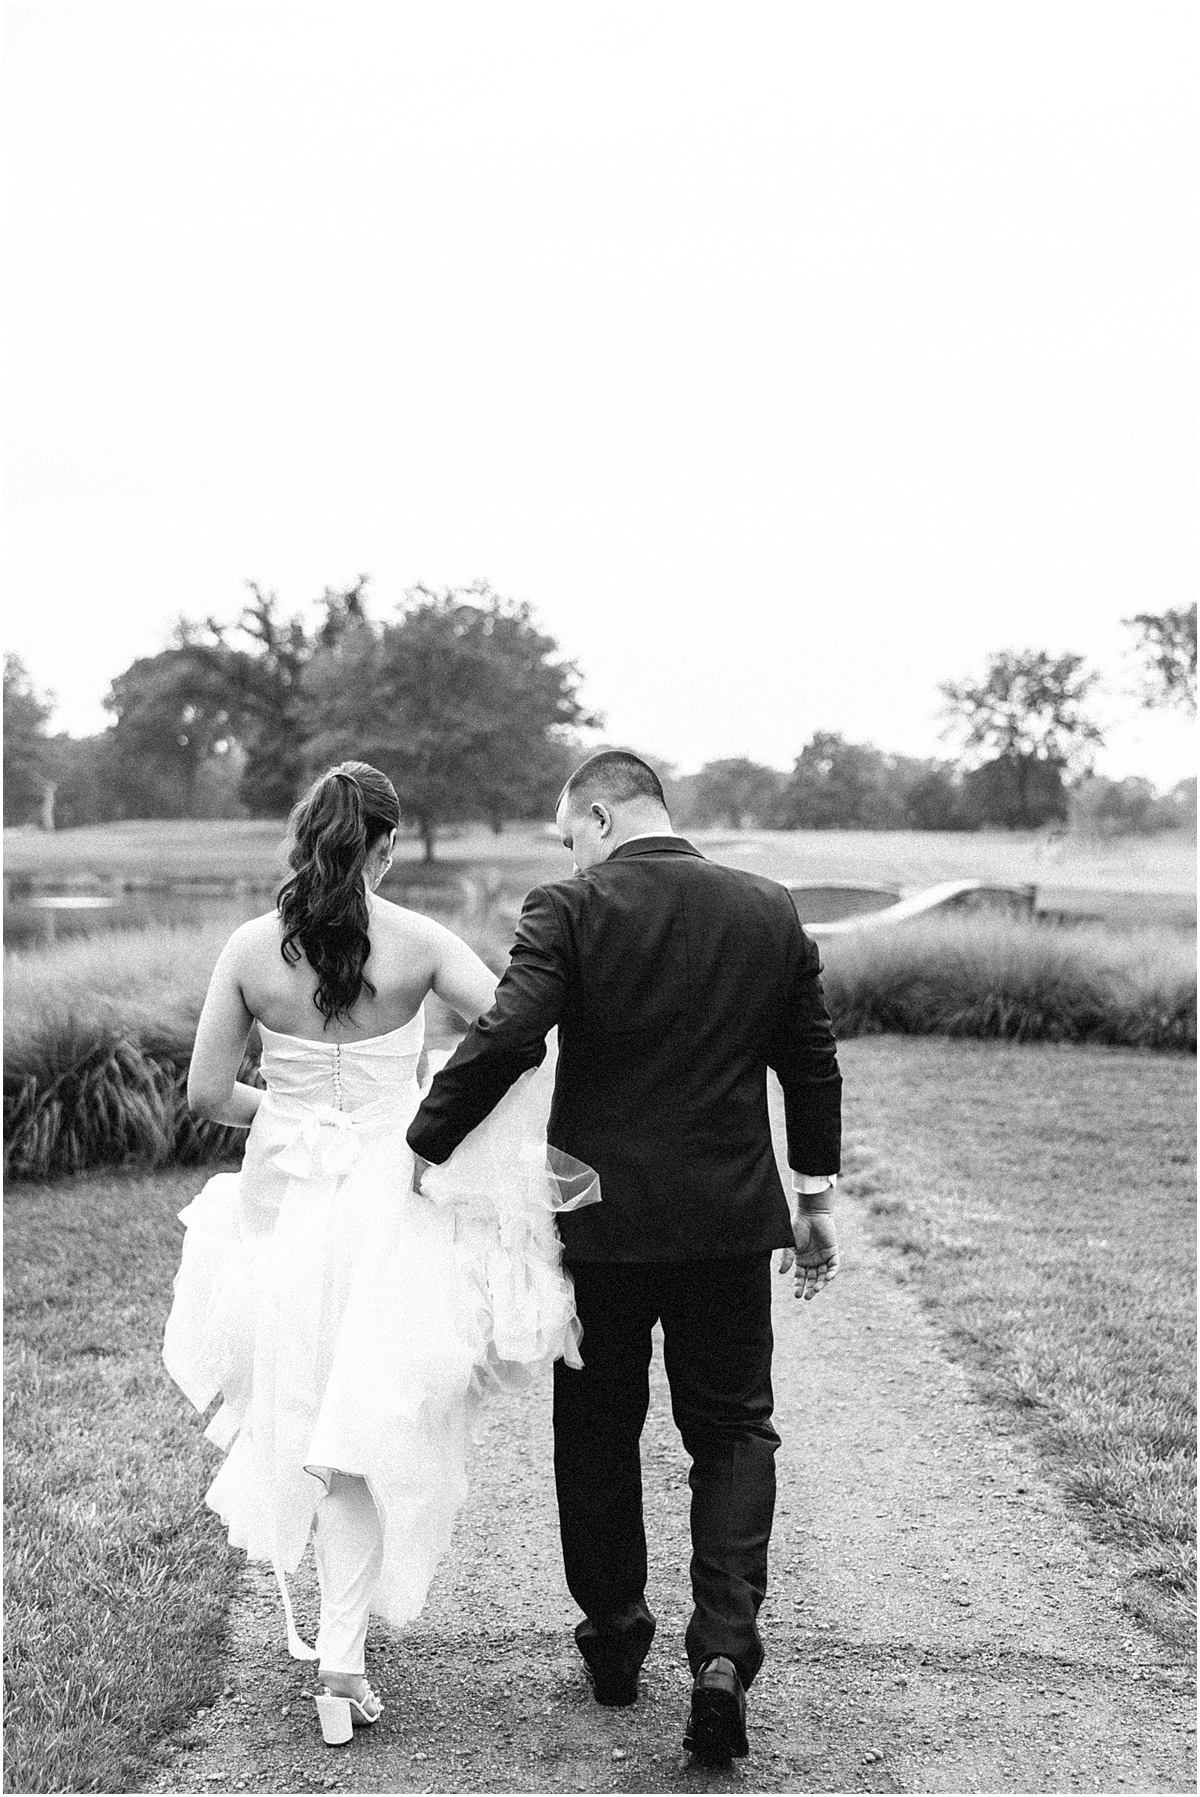 groom helps bride carry wedding dress as they walk